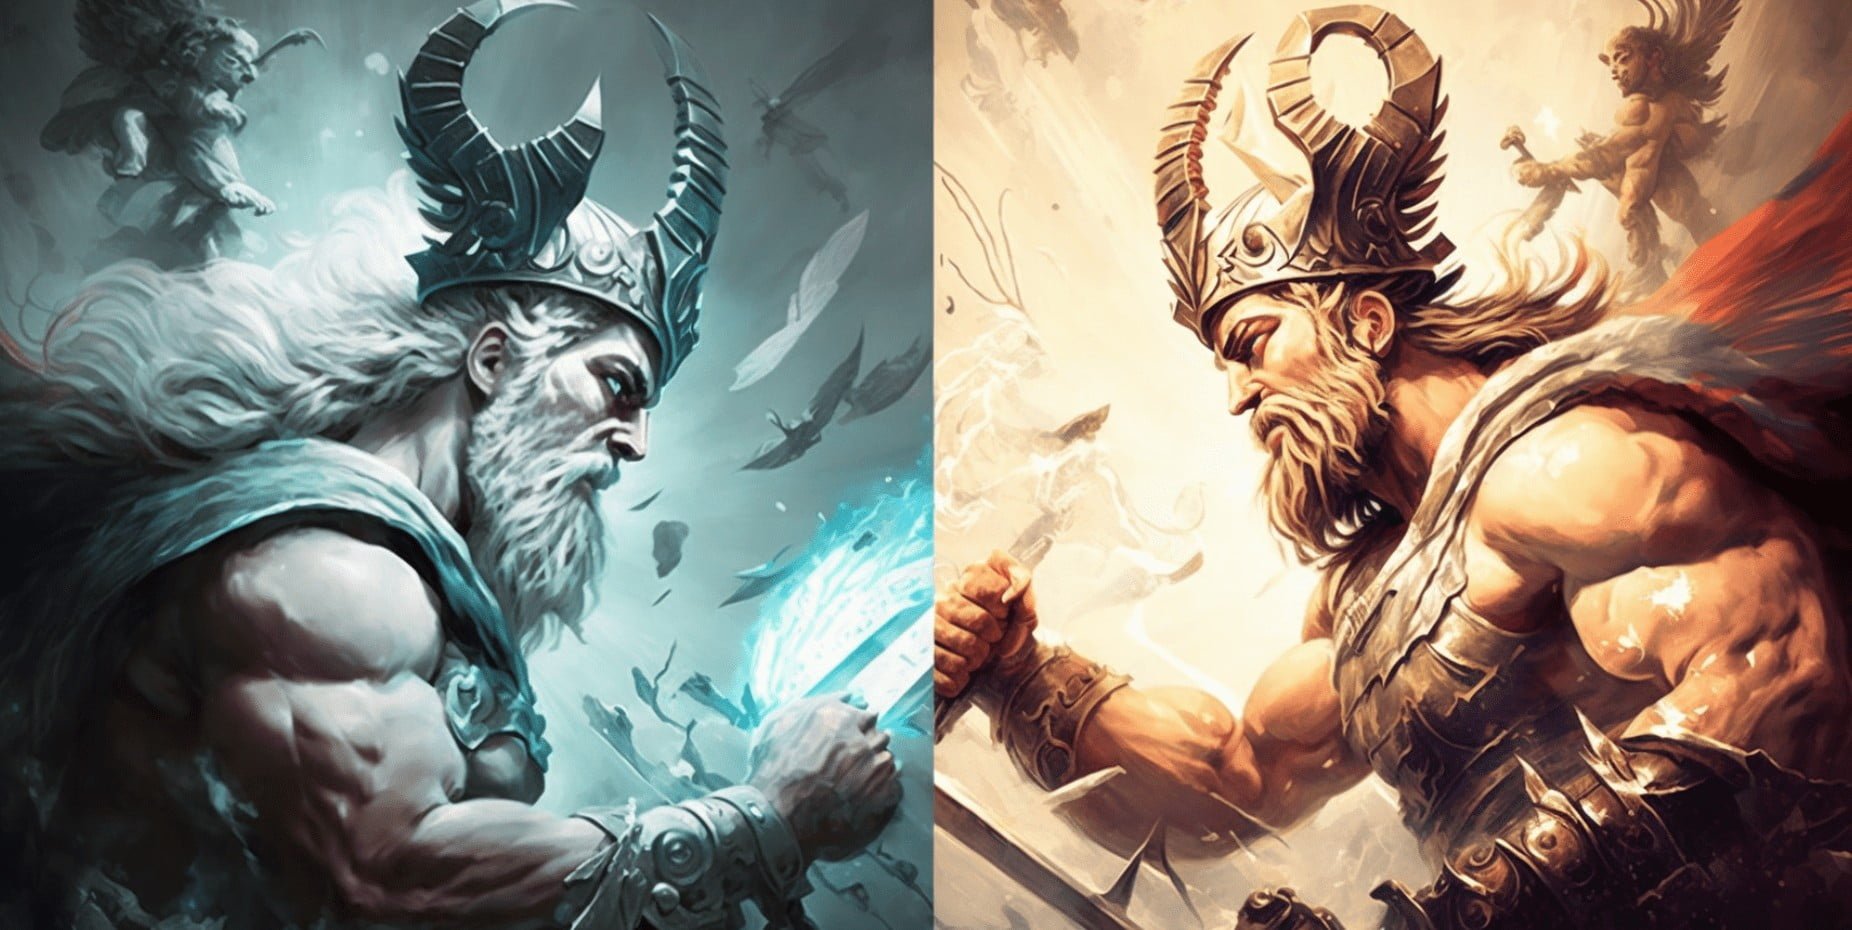 Zeus vs. Odin - How Do they Compare?